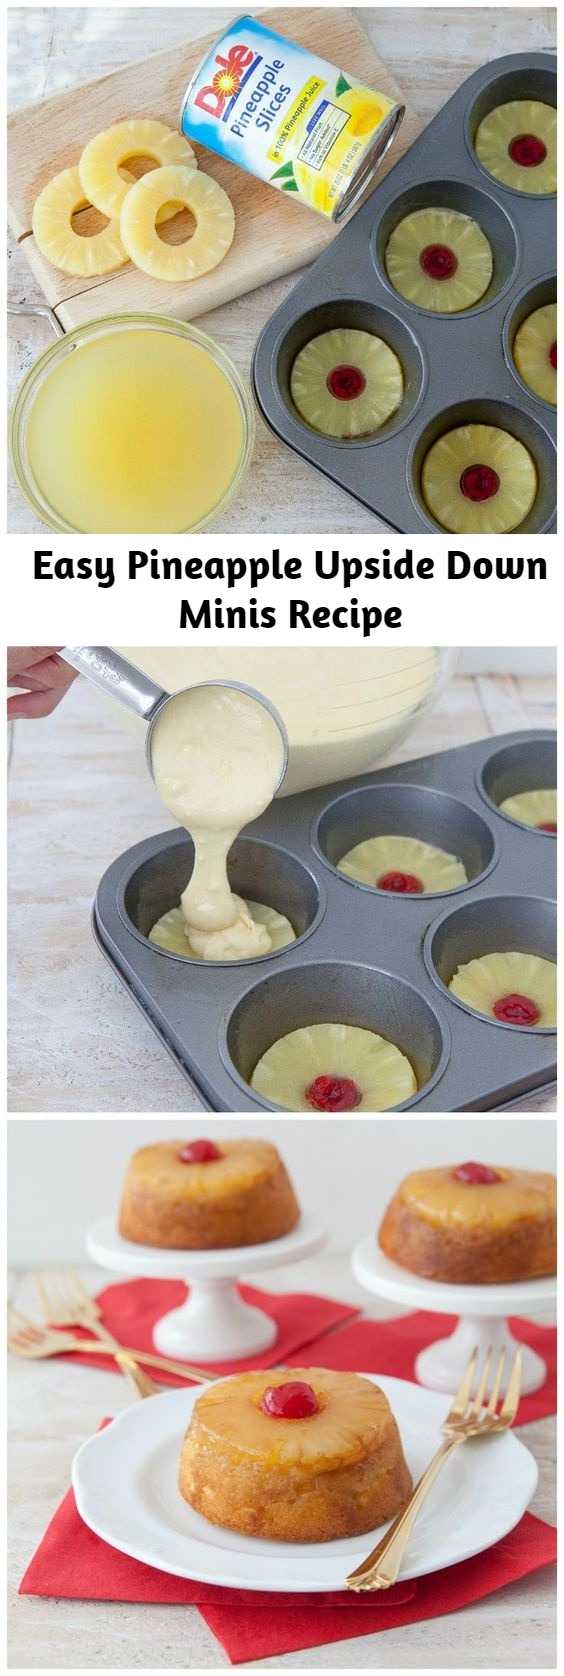 Easy Pineapple Upside Down Minis Recipe